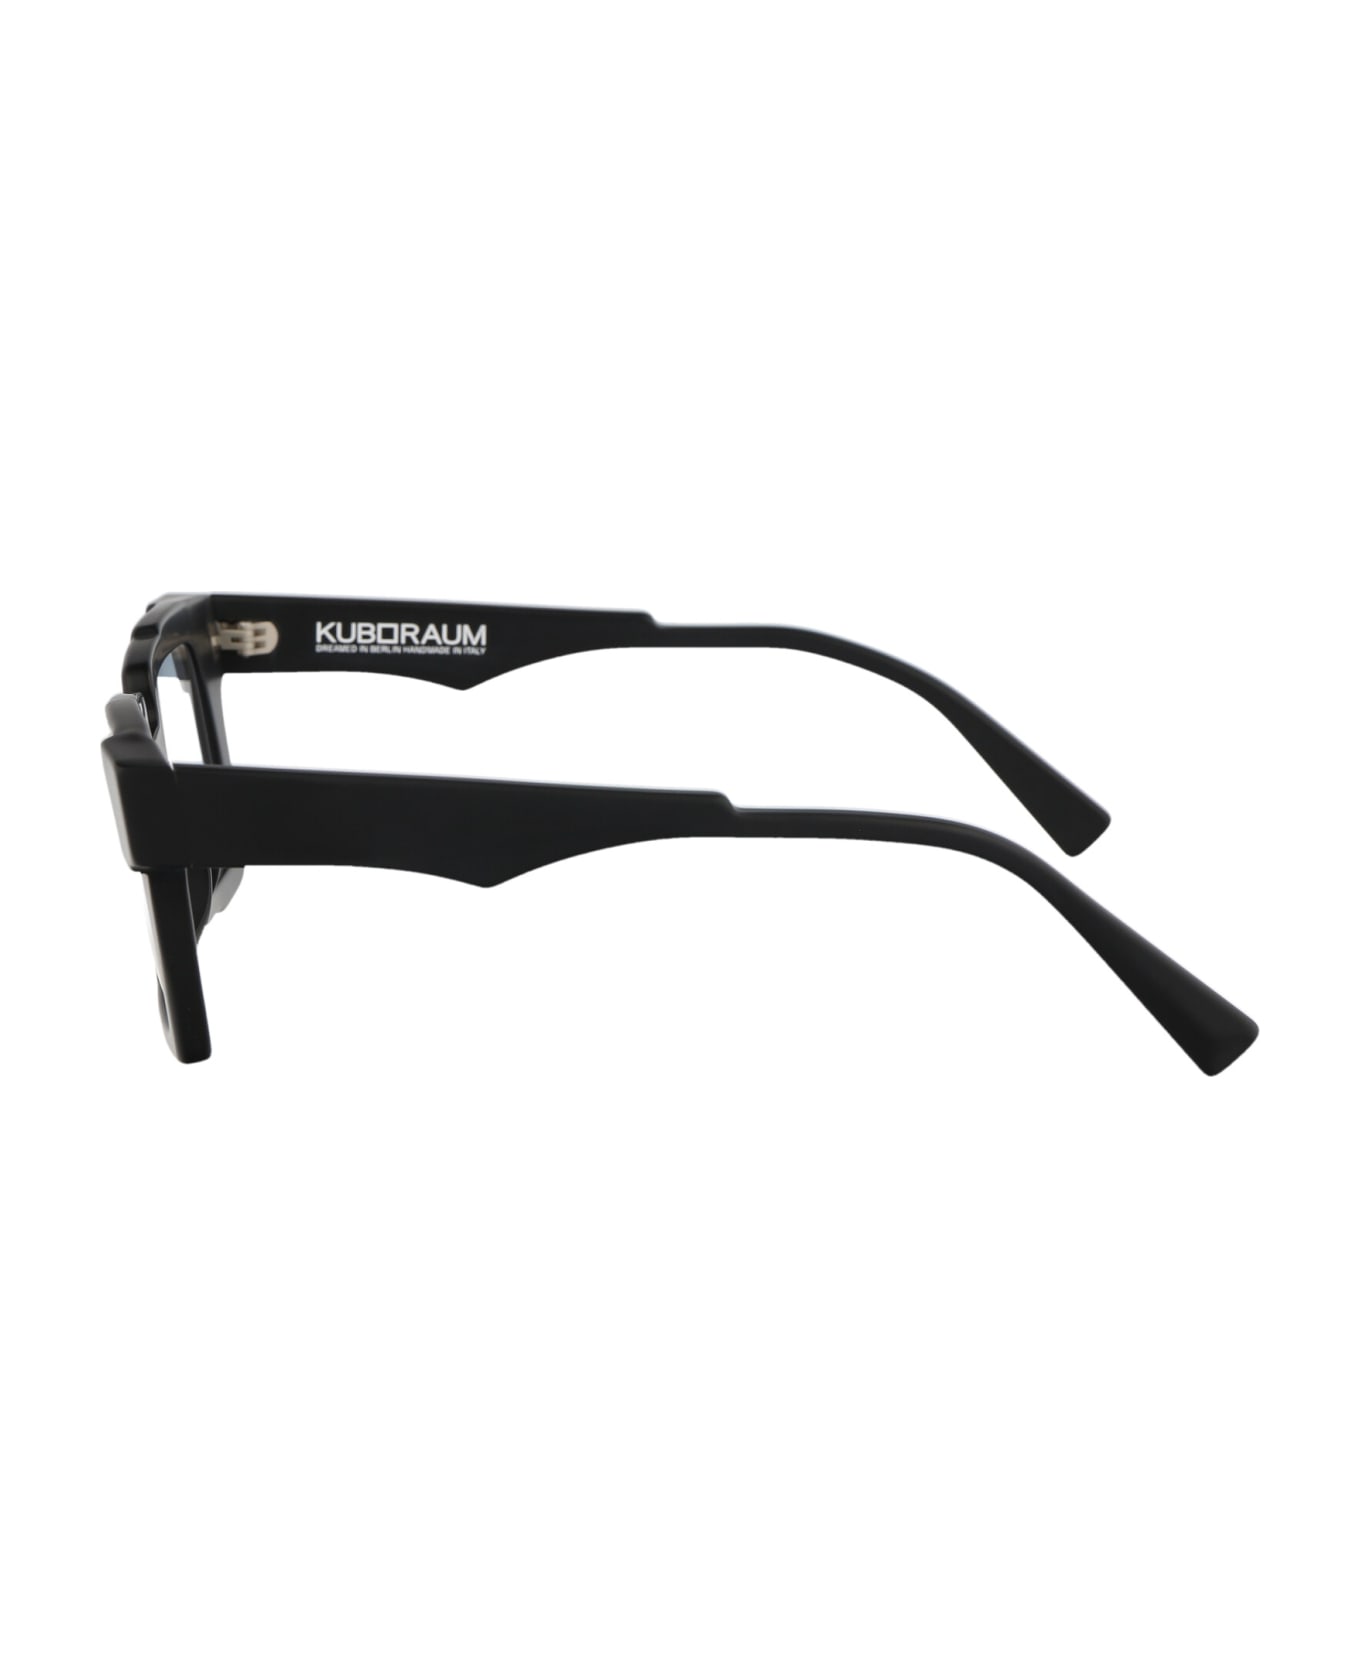 Kuboraum Maske K31 Glasses - BM black